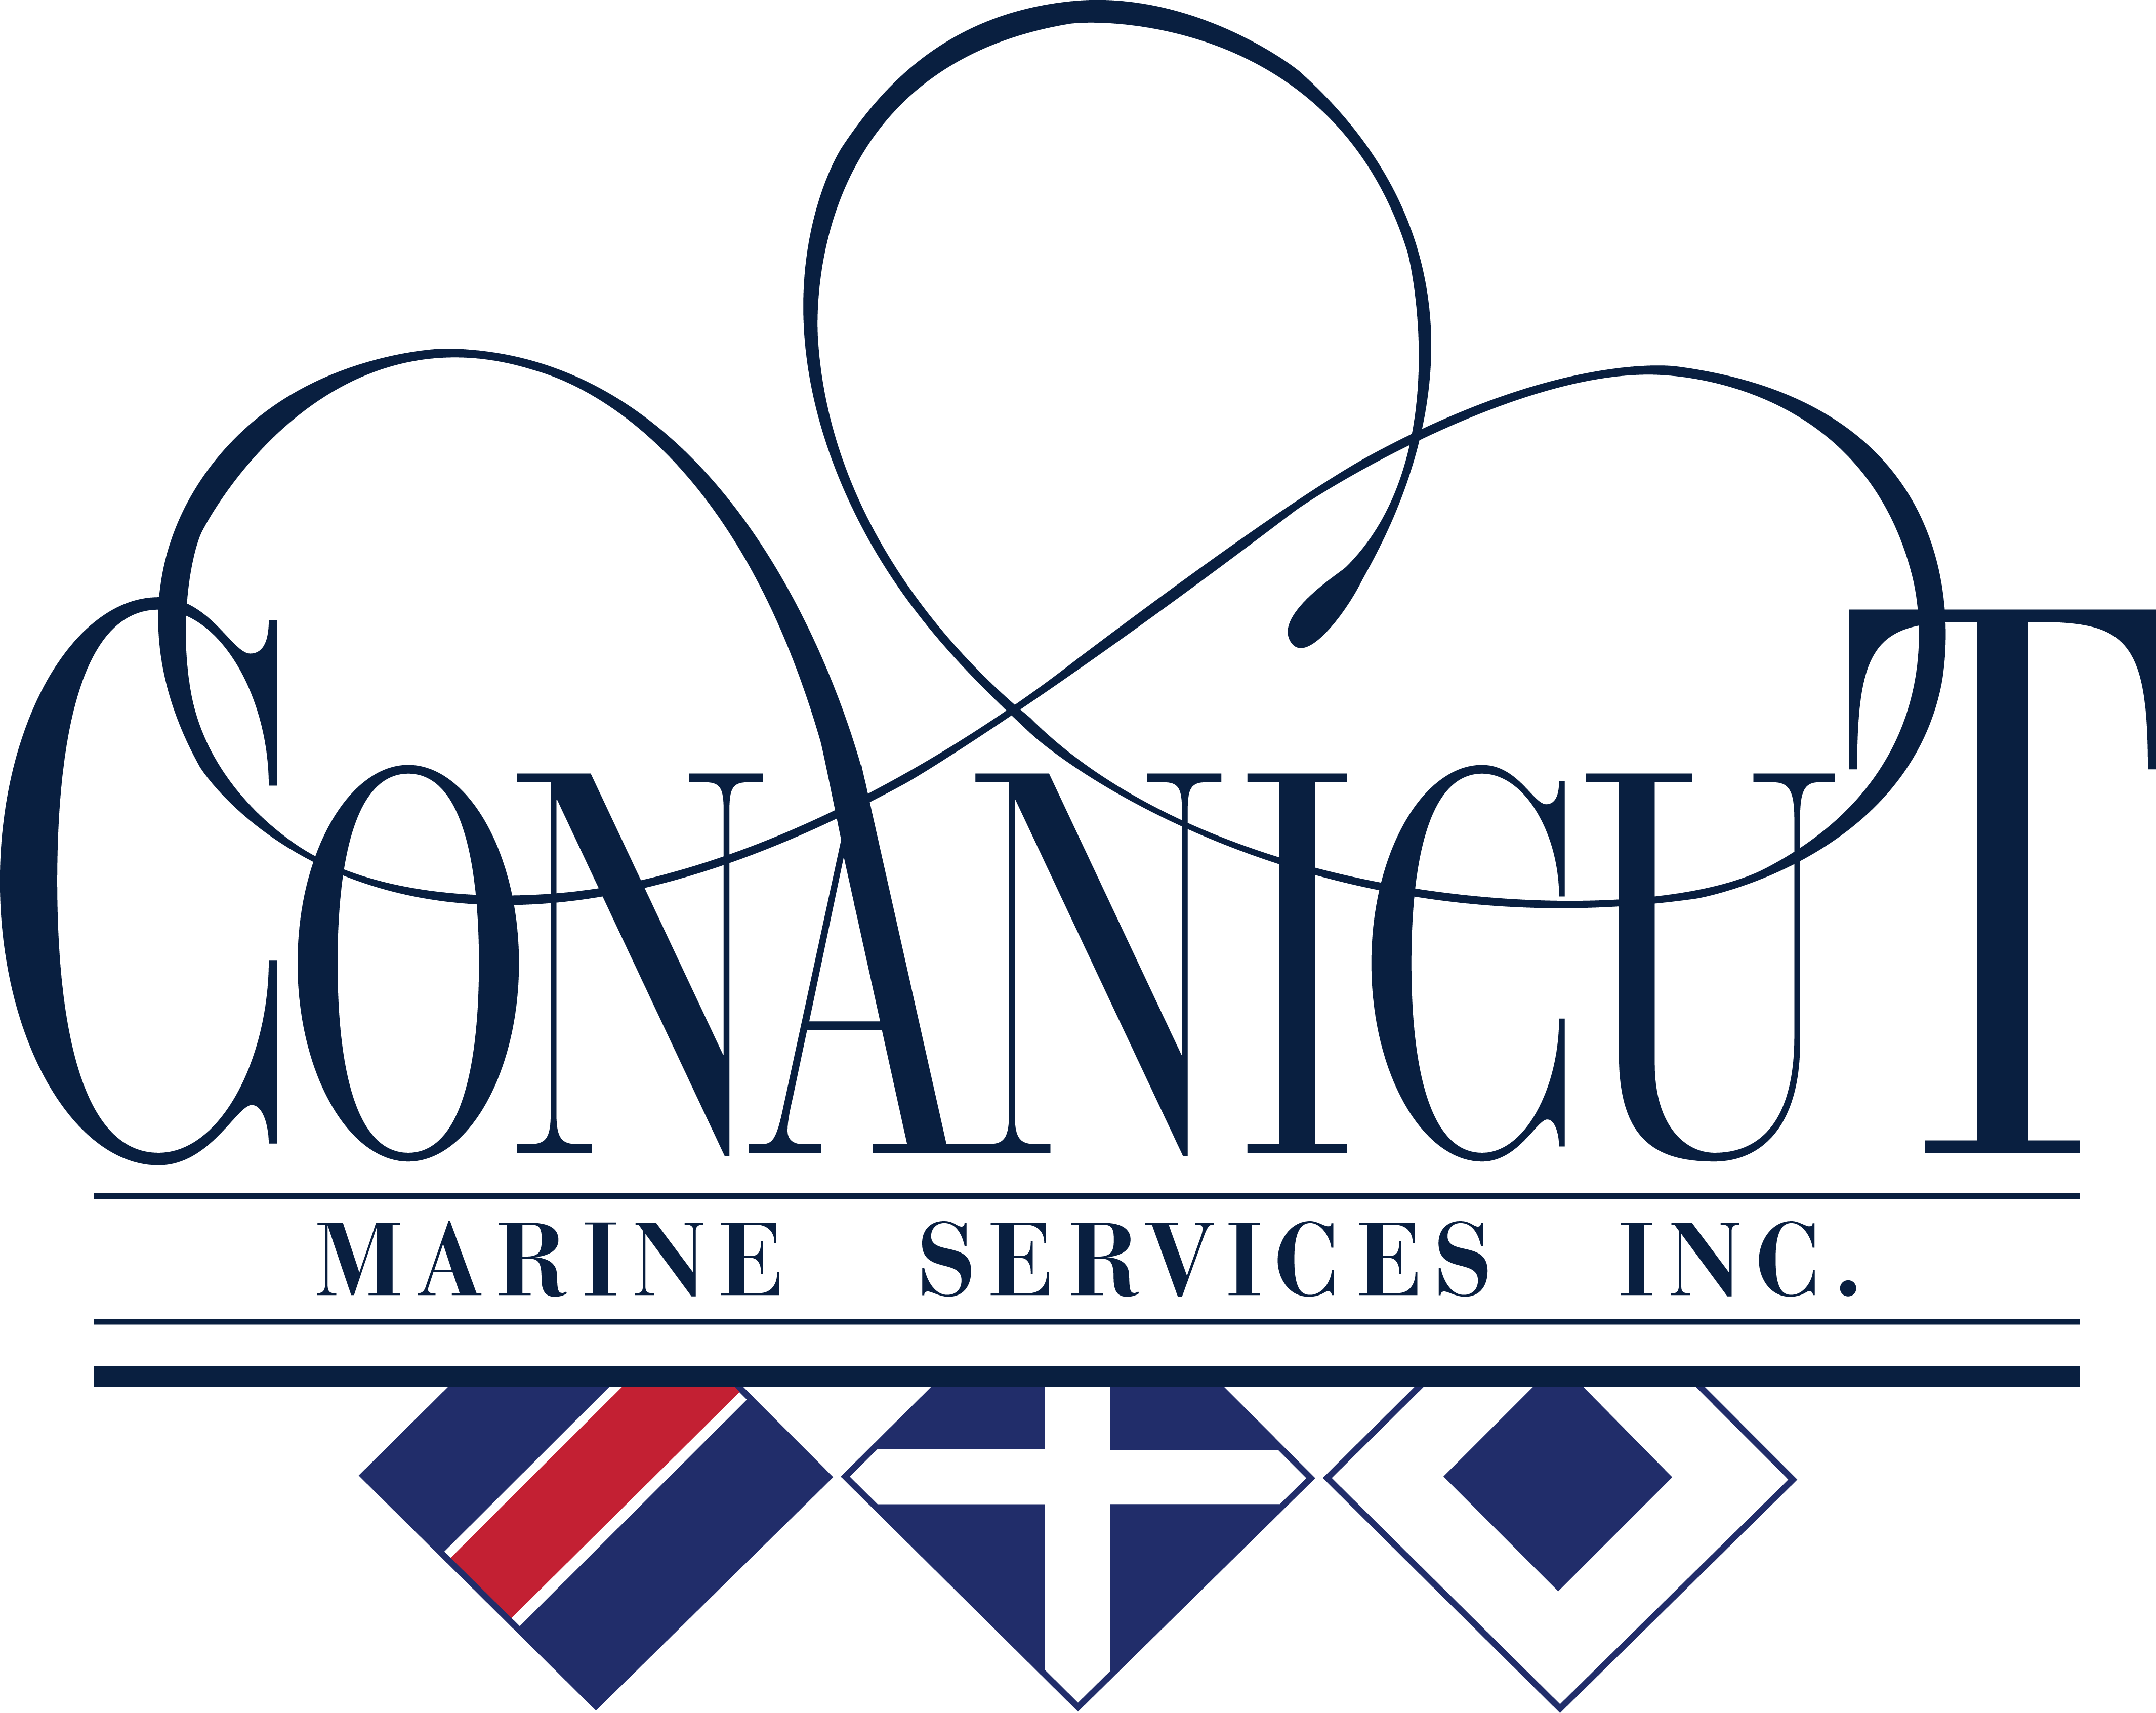 D - Conanicut Marine Services